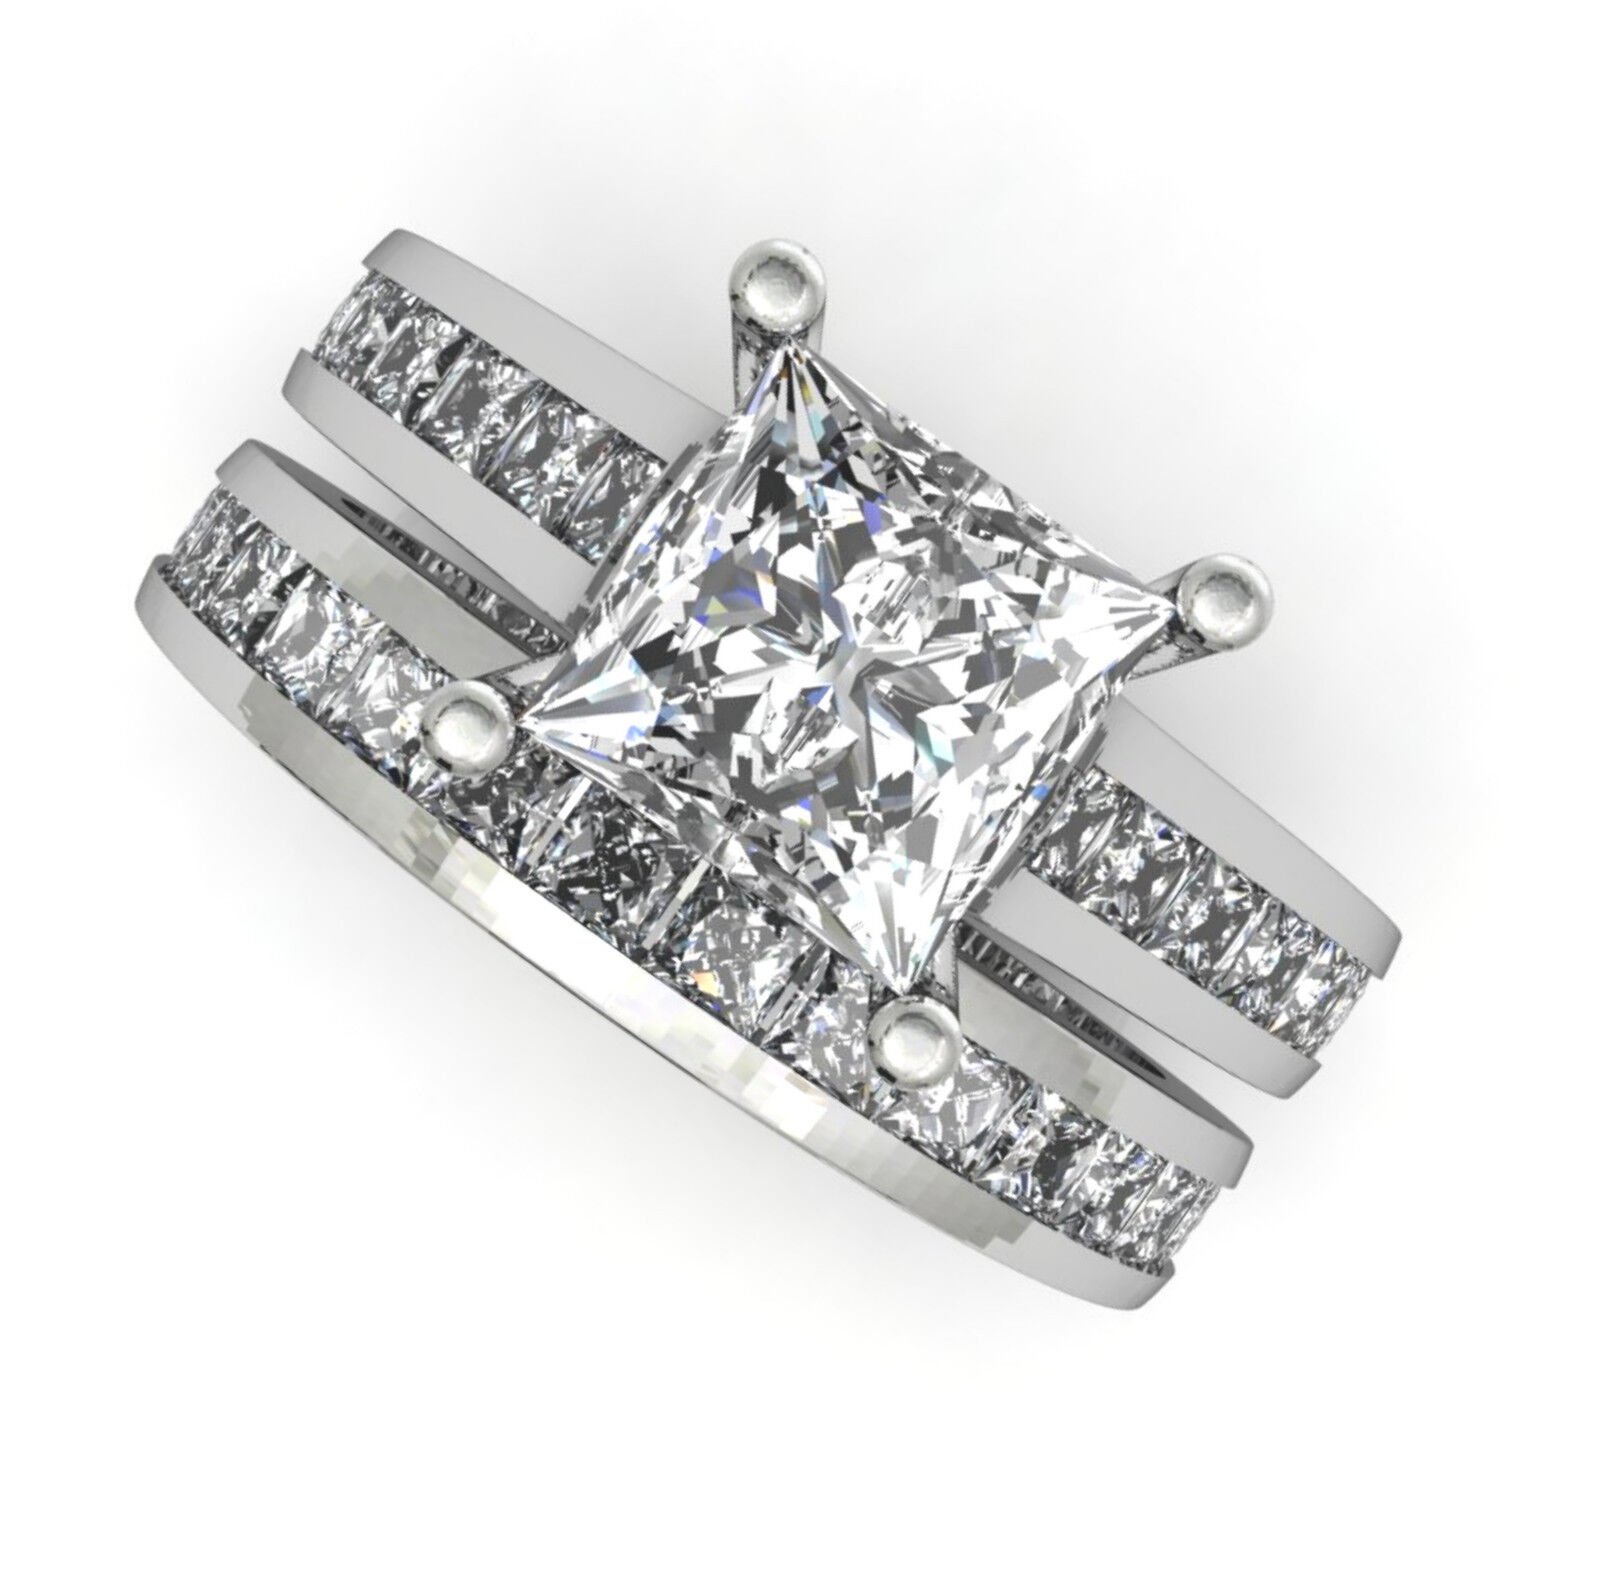 3.25ct Princess cut Diamond Engagement Ring Wedding Band Solid 14k White Gold Angus - фотография #2